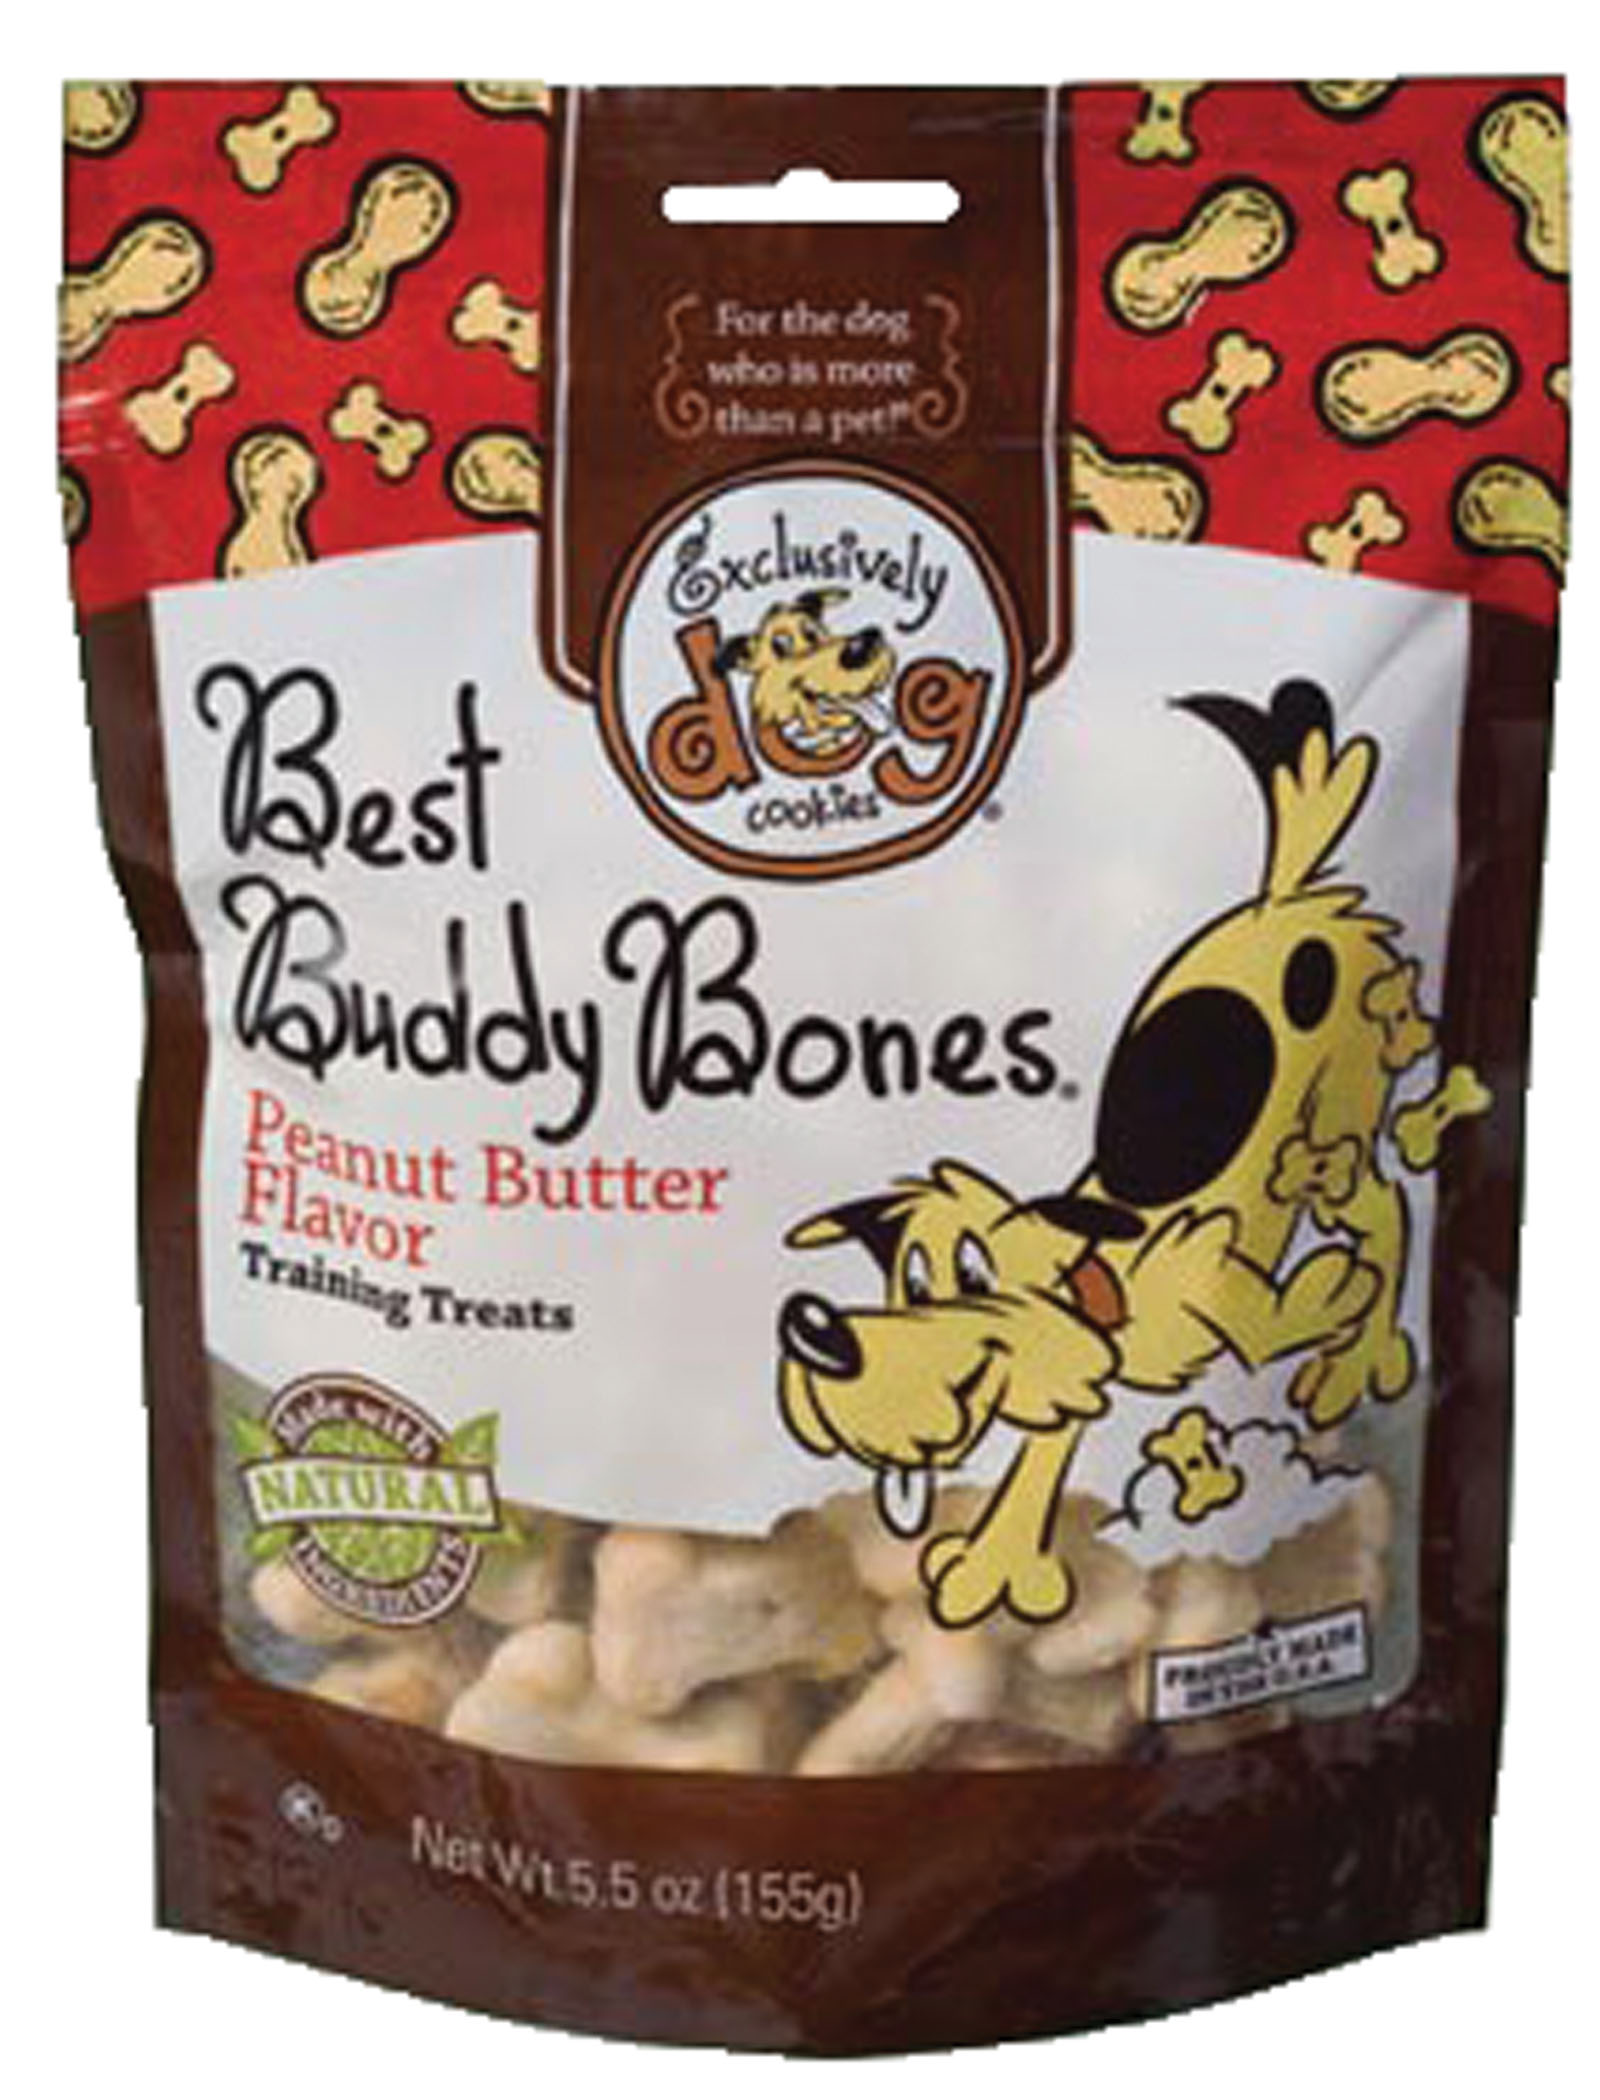 Best Buddy Bones (Option 1: 5.5 Oz, Option 2: Peanut Butter)